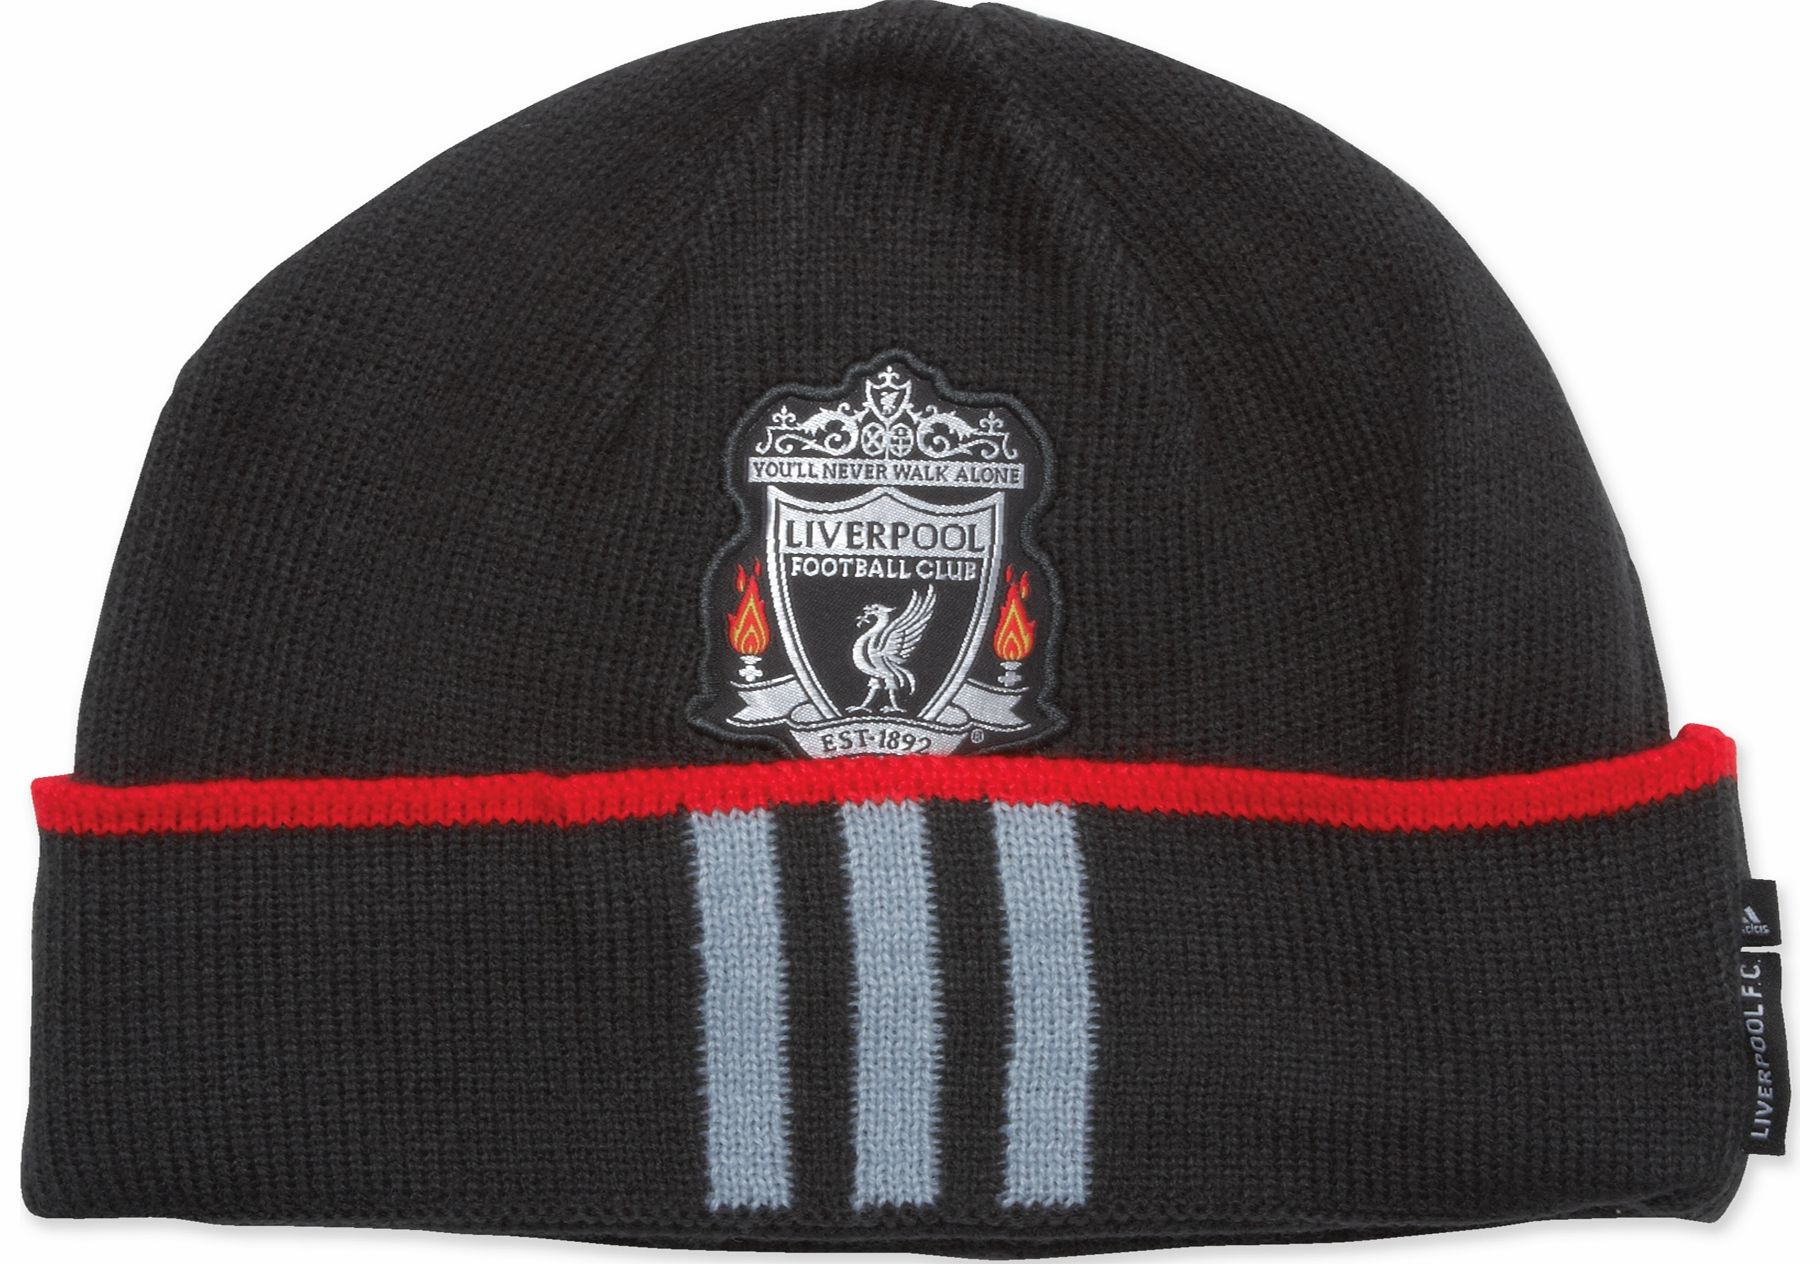 Adidas 2011-12 Liverpool Adidas Woolie Hat (Black)